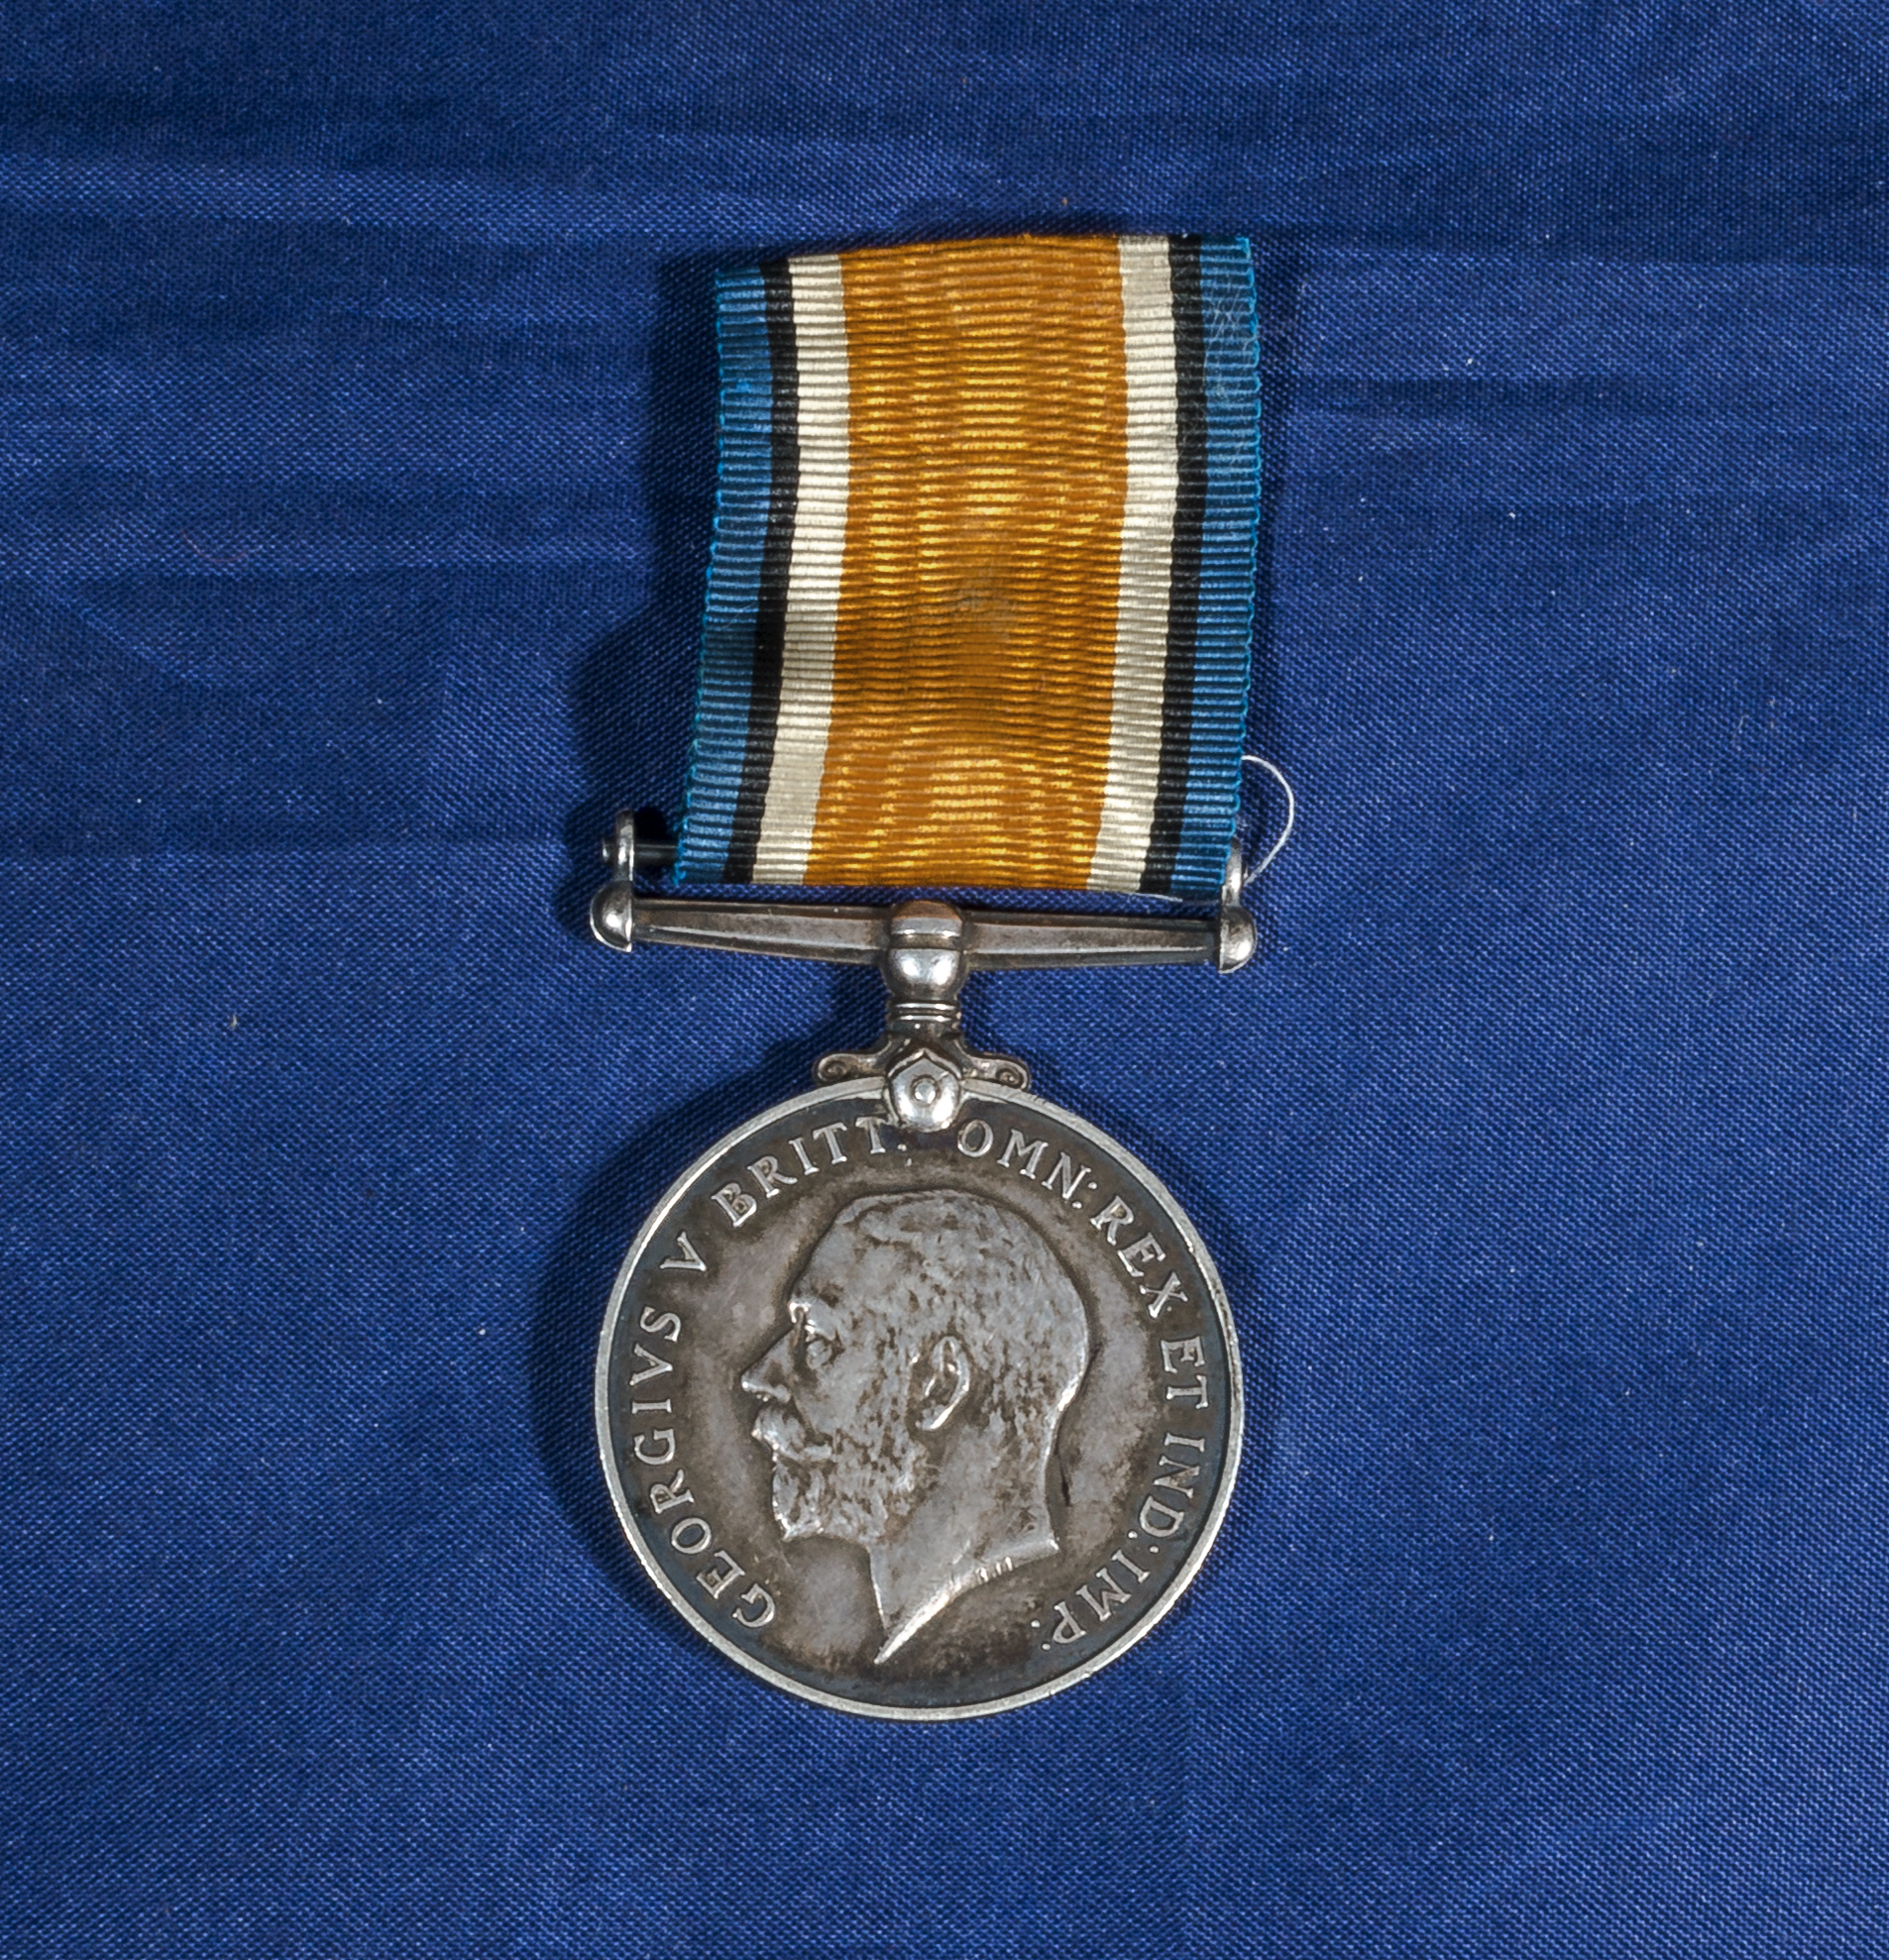 A WW1 medal. 228086 SPR W. Smith R.E